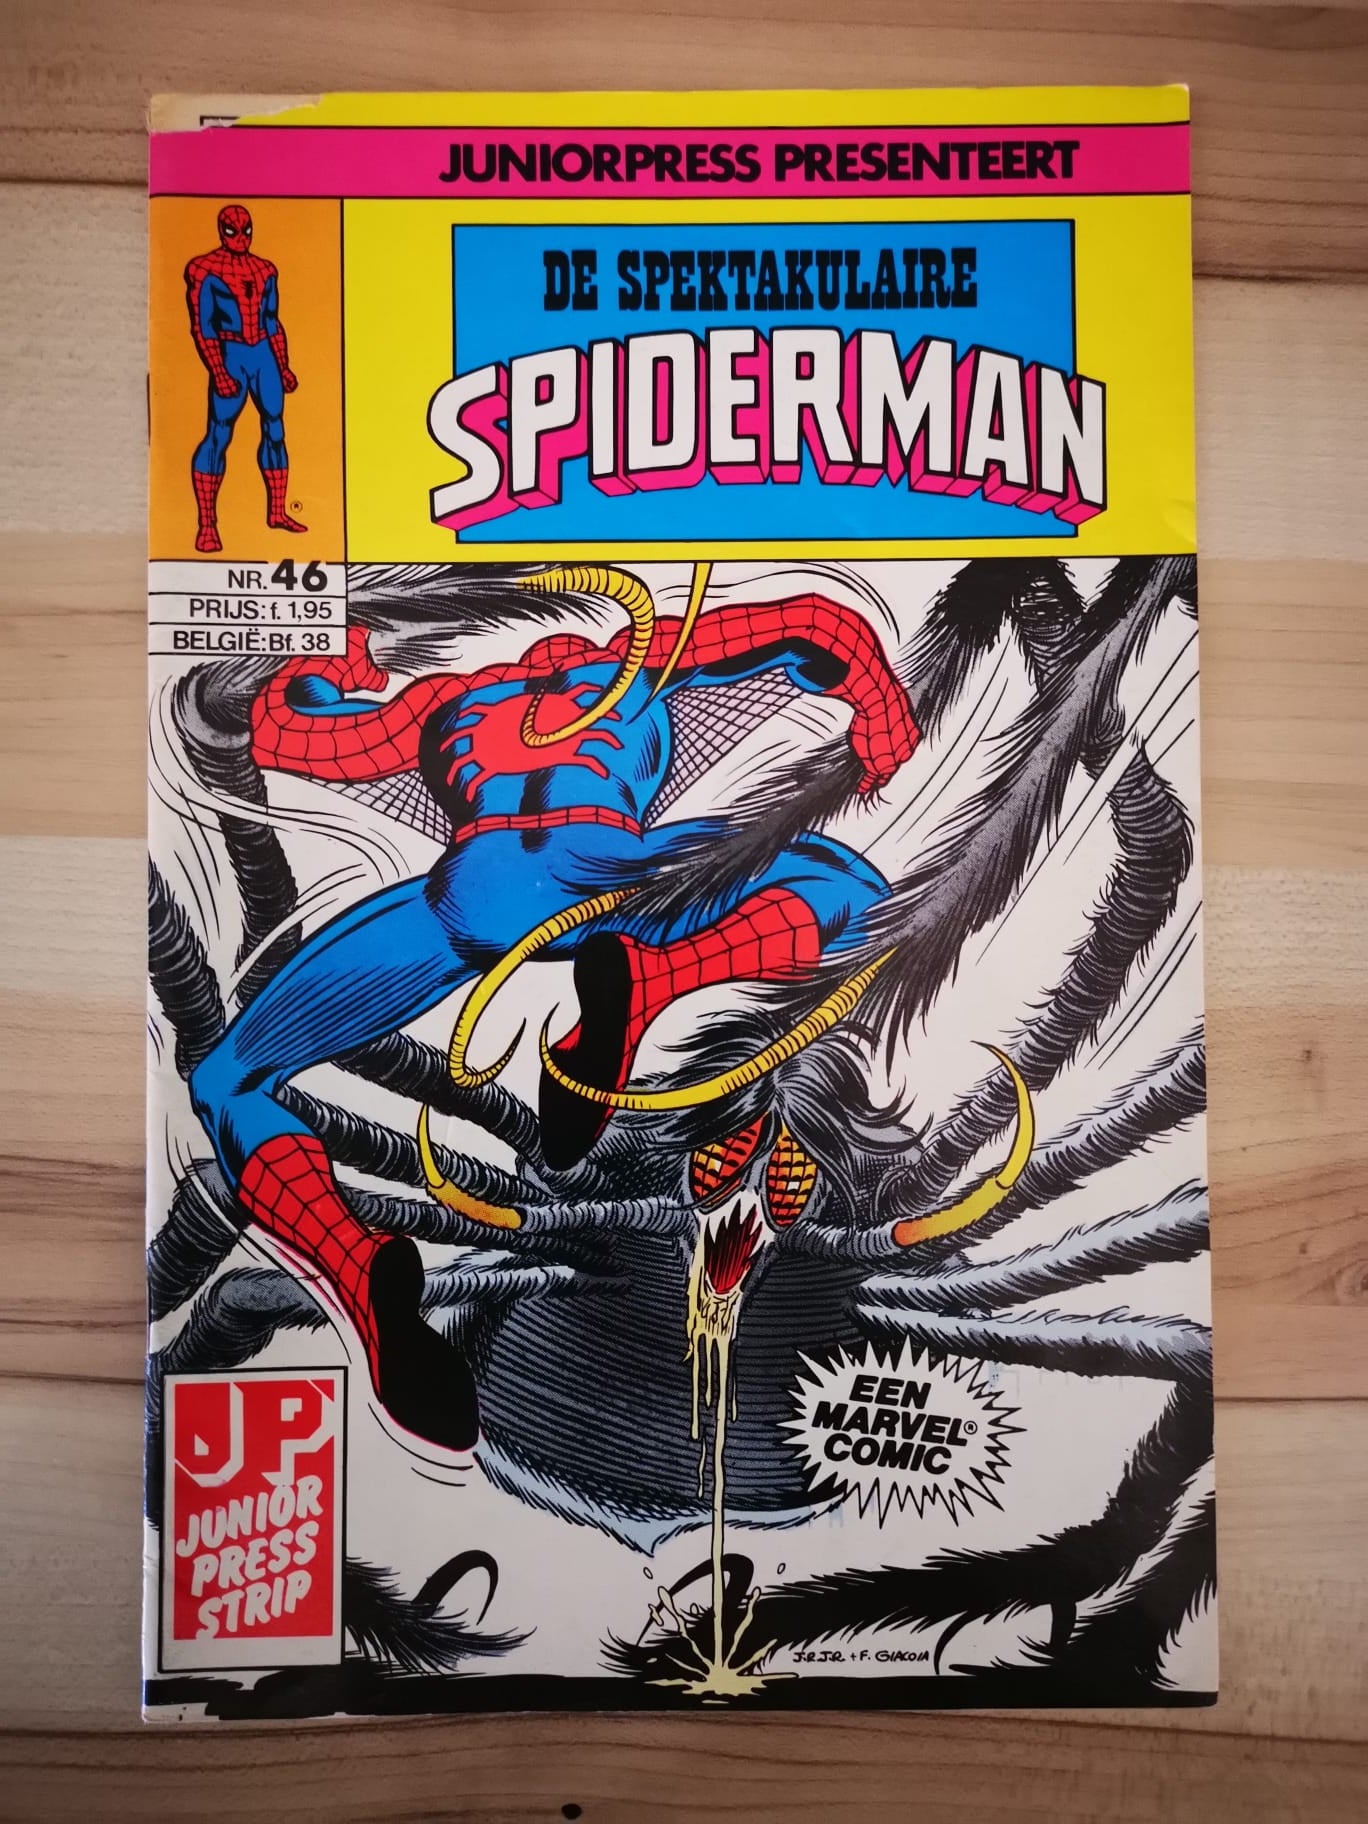 De spektakulaire spiderman #46